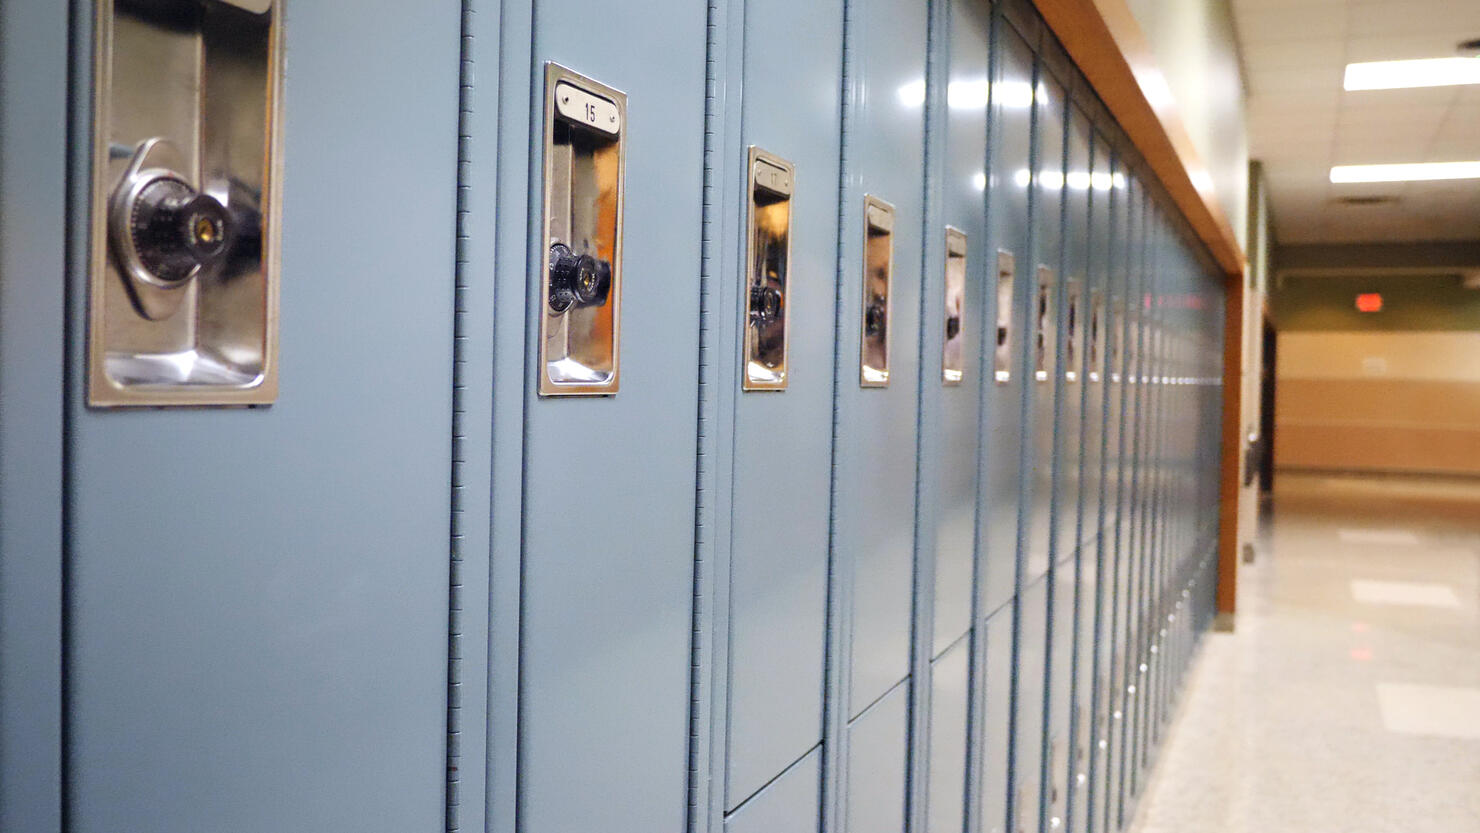 Row of lockers in school hallway